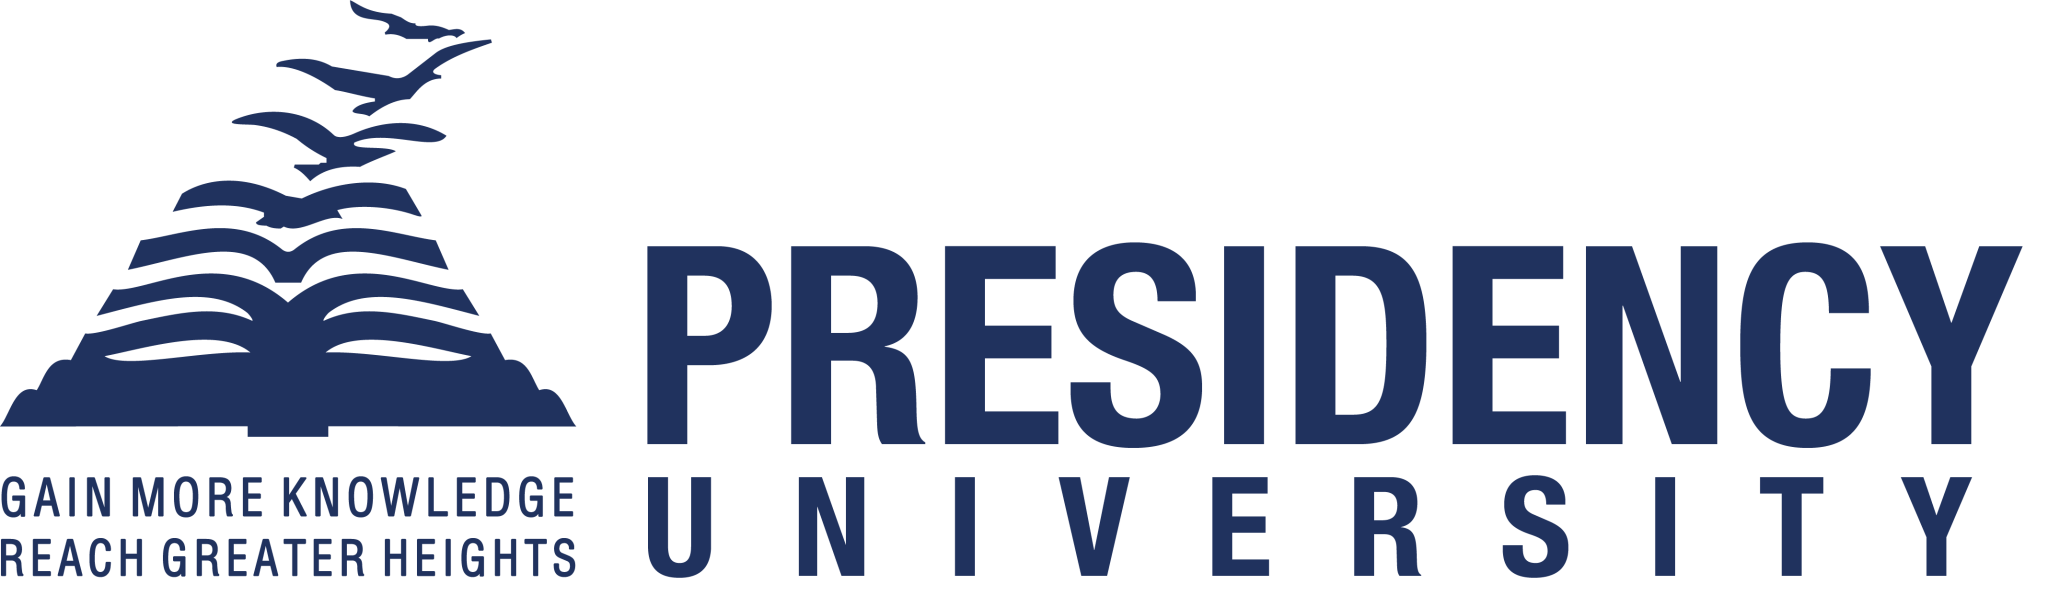 phd admission presidency university